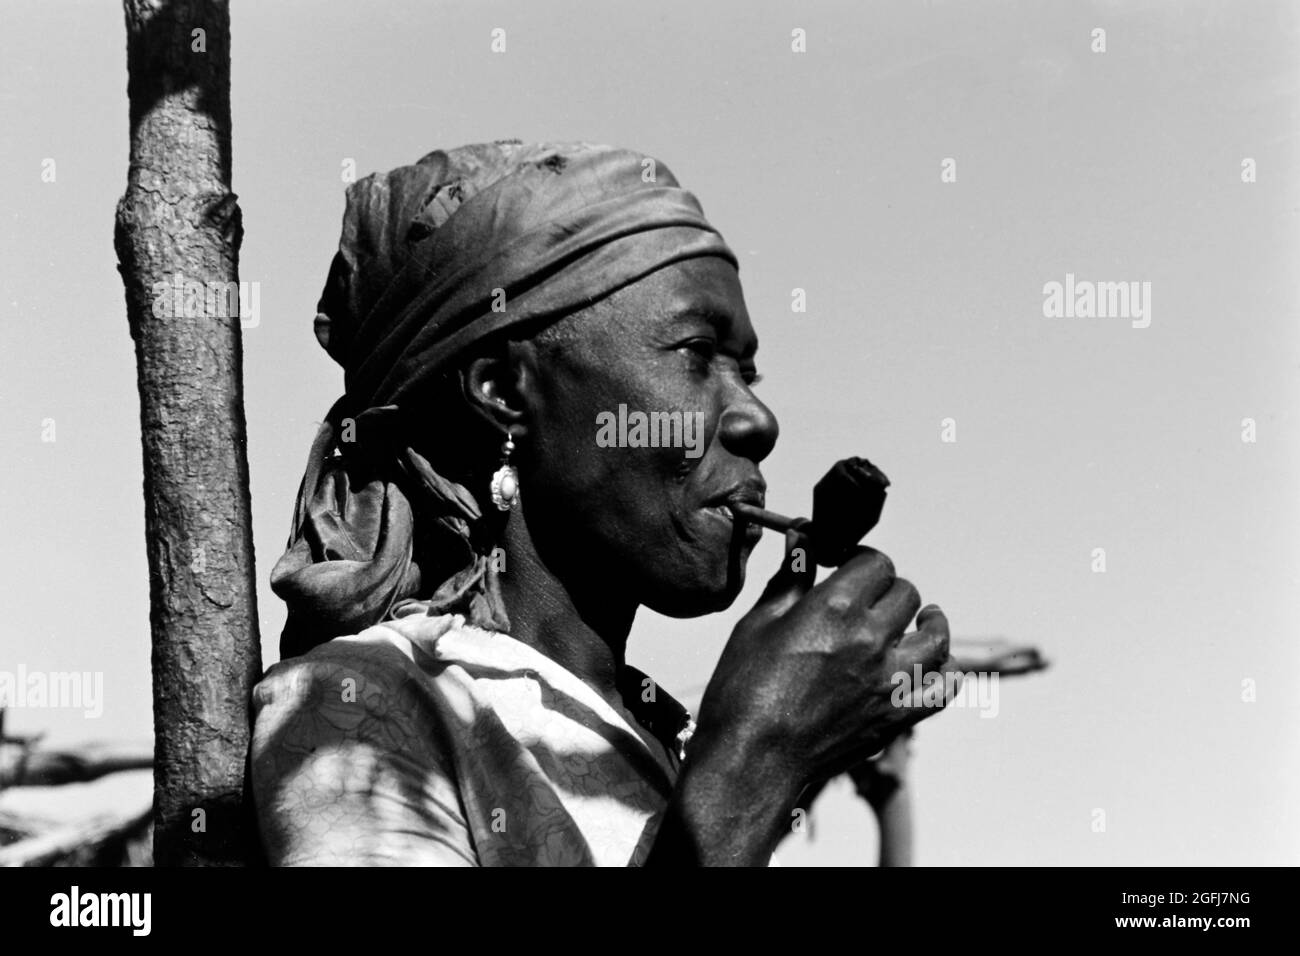 Pfeife rauchende Haïtianerin, 1967. Femme haïtienne fumant son pipe, 1967. Banque D'Images